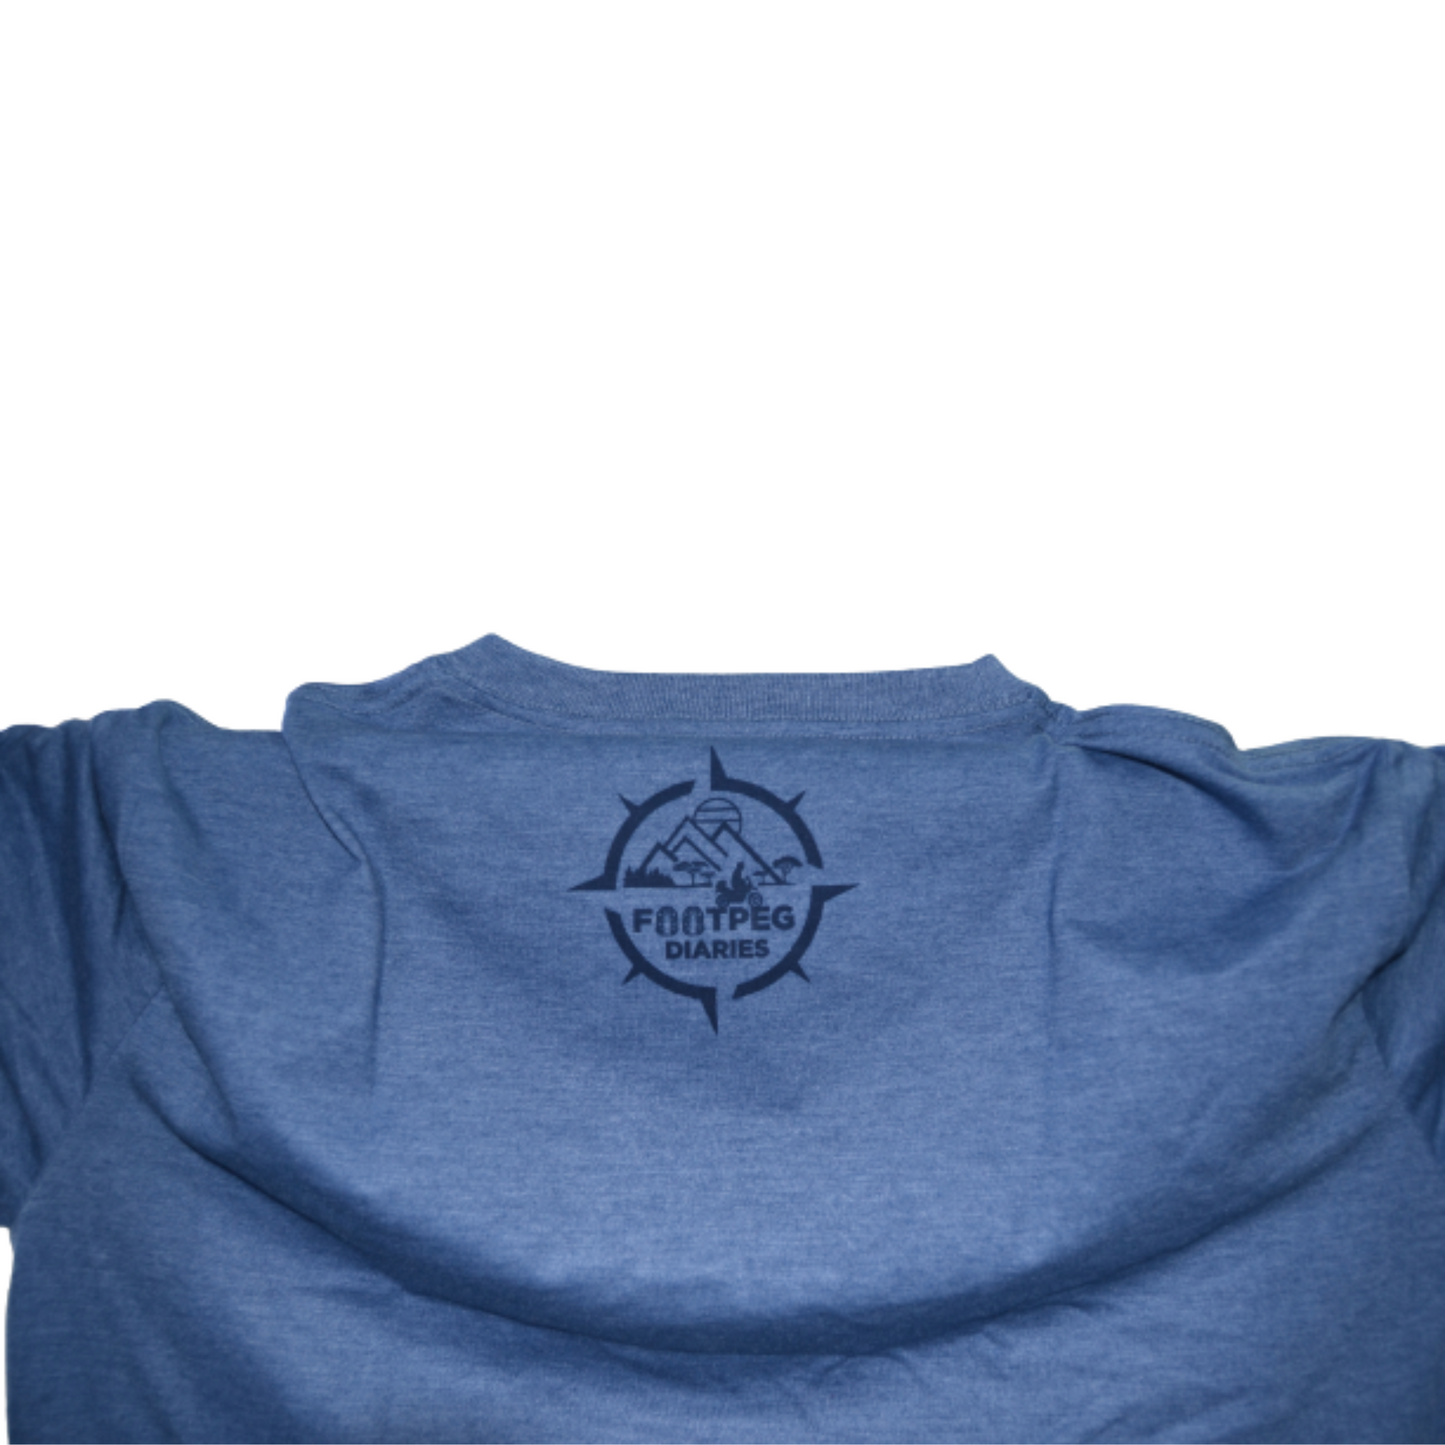 Footpeg Diaries T-shirt  - Blue